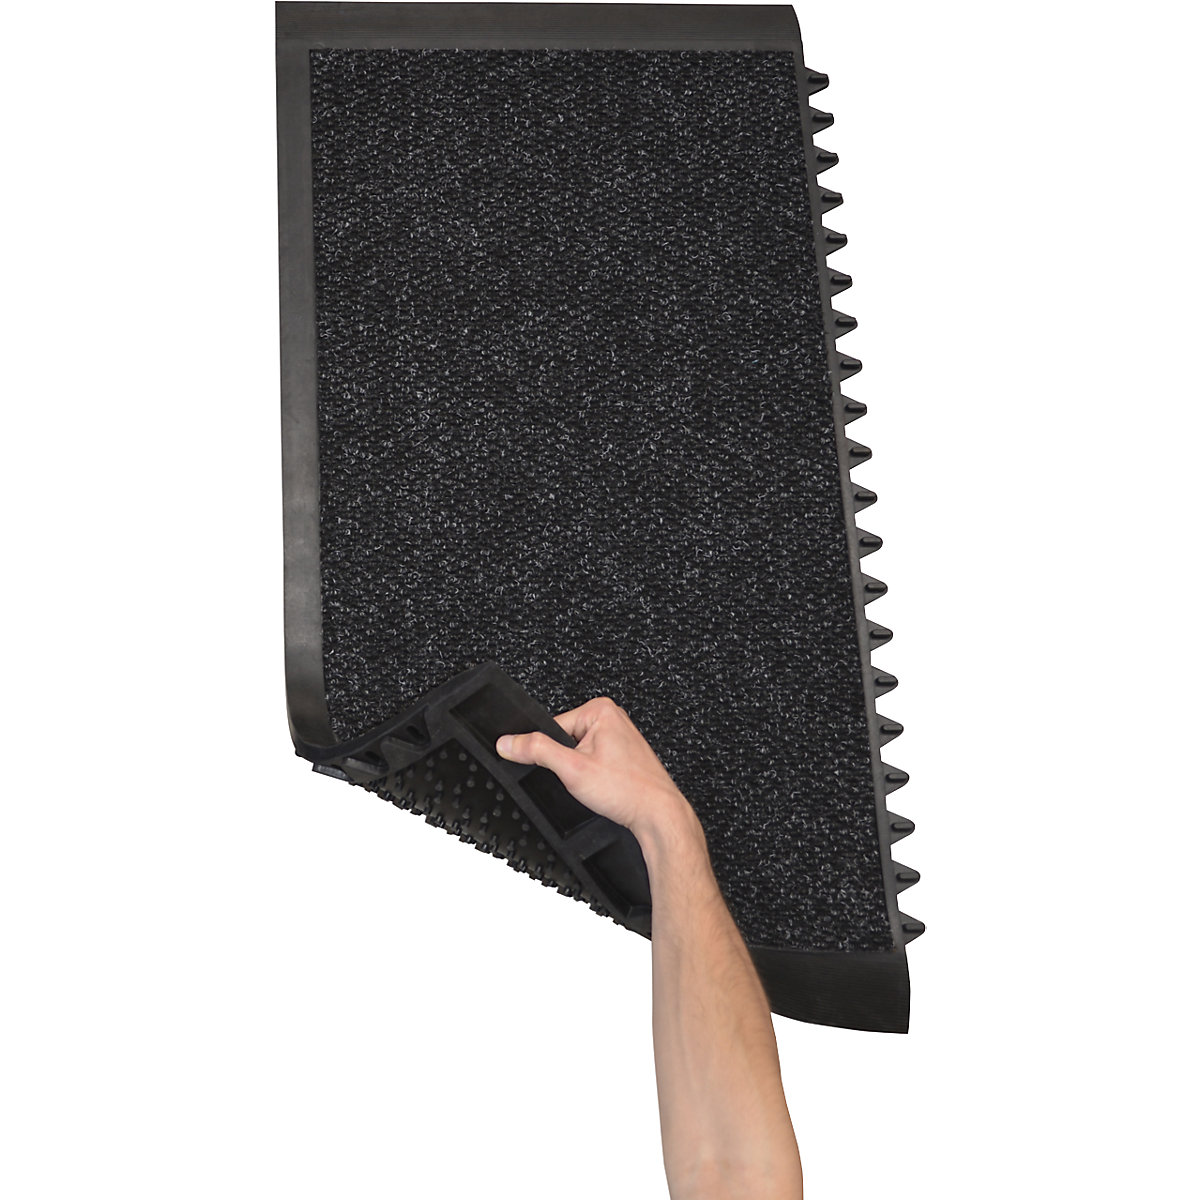 Additional carpet element for Sani-Master™ entrance matting - NOTRAX